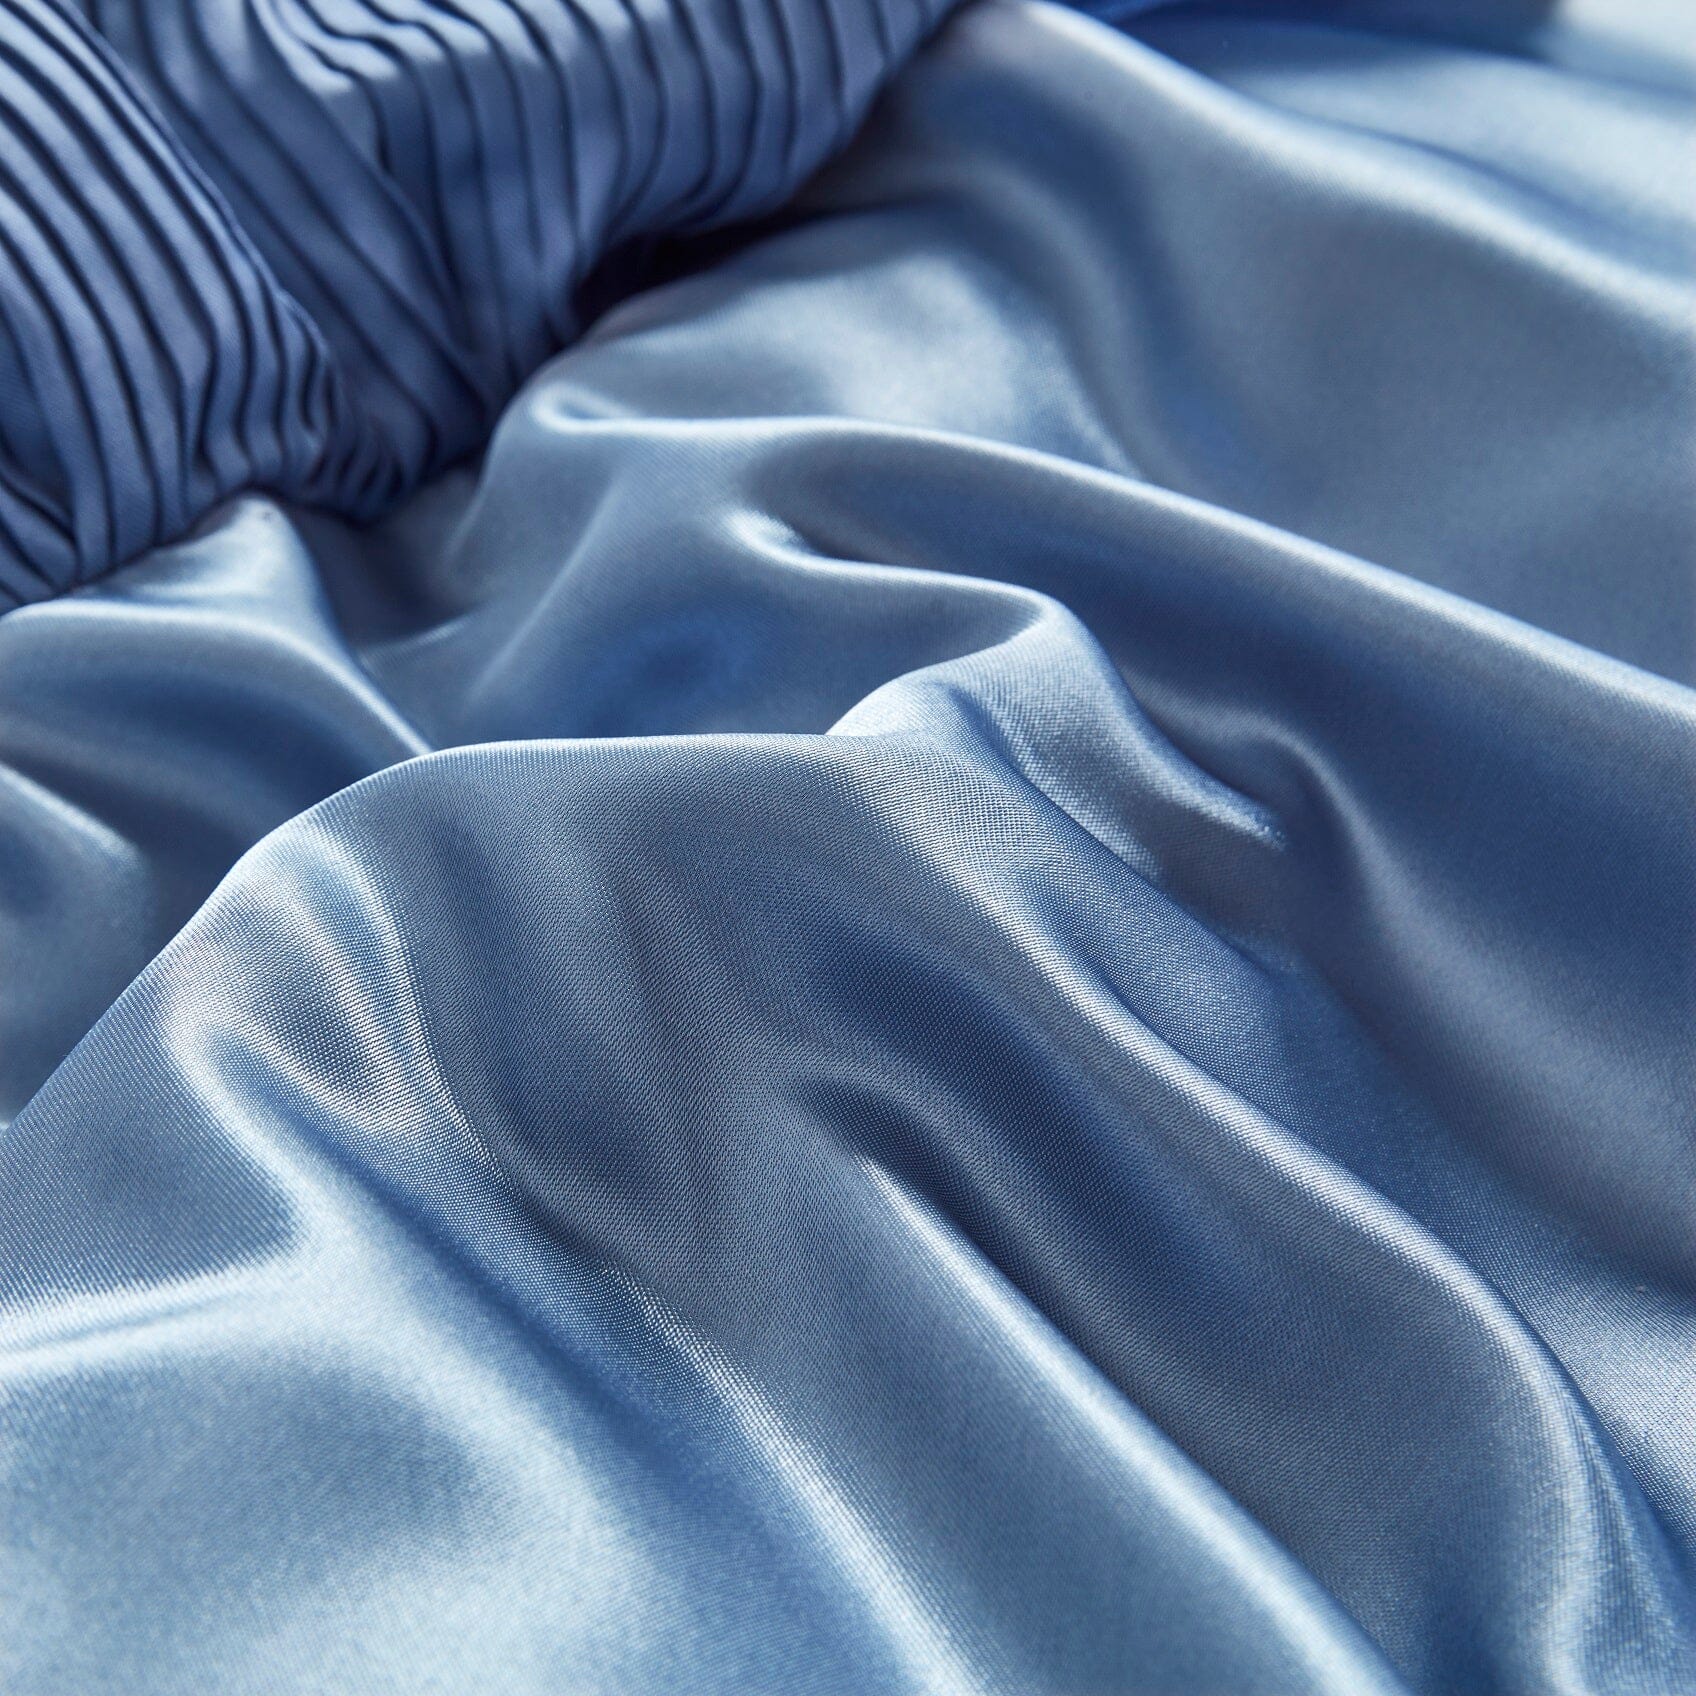 Tache Satin Floral Lace Ruffle Sweet Victorian Luxurious Blue Comforter Set (MZ002-Blue)